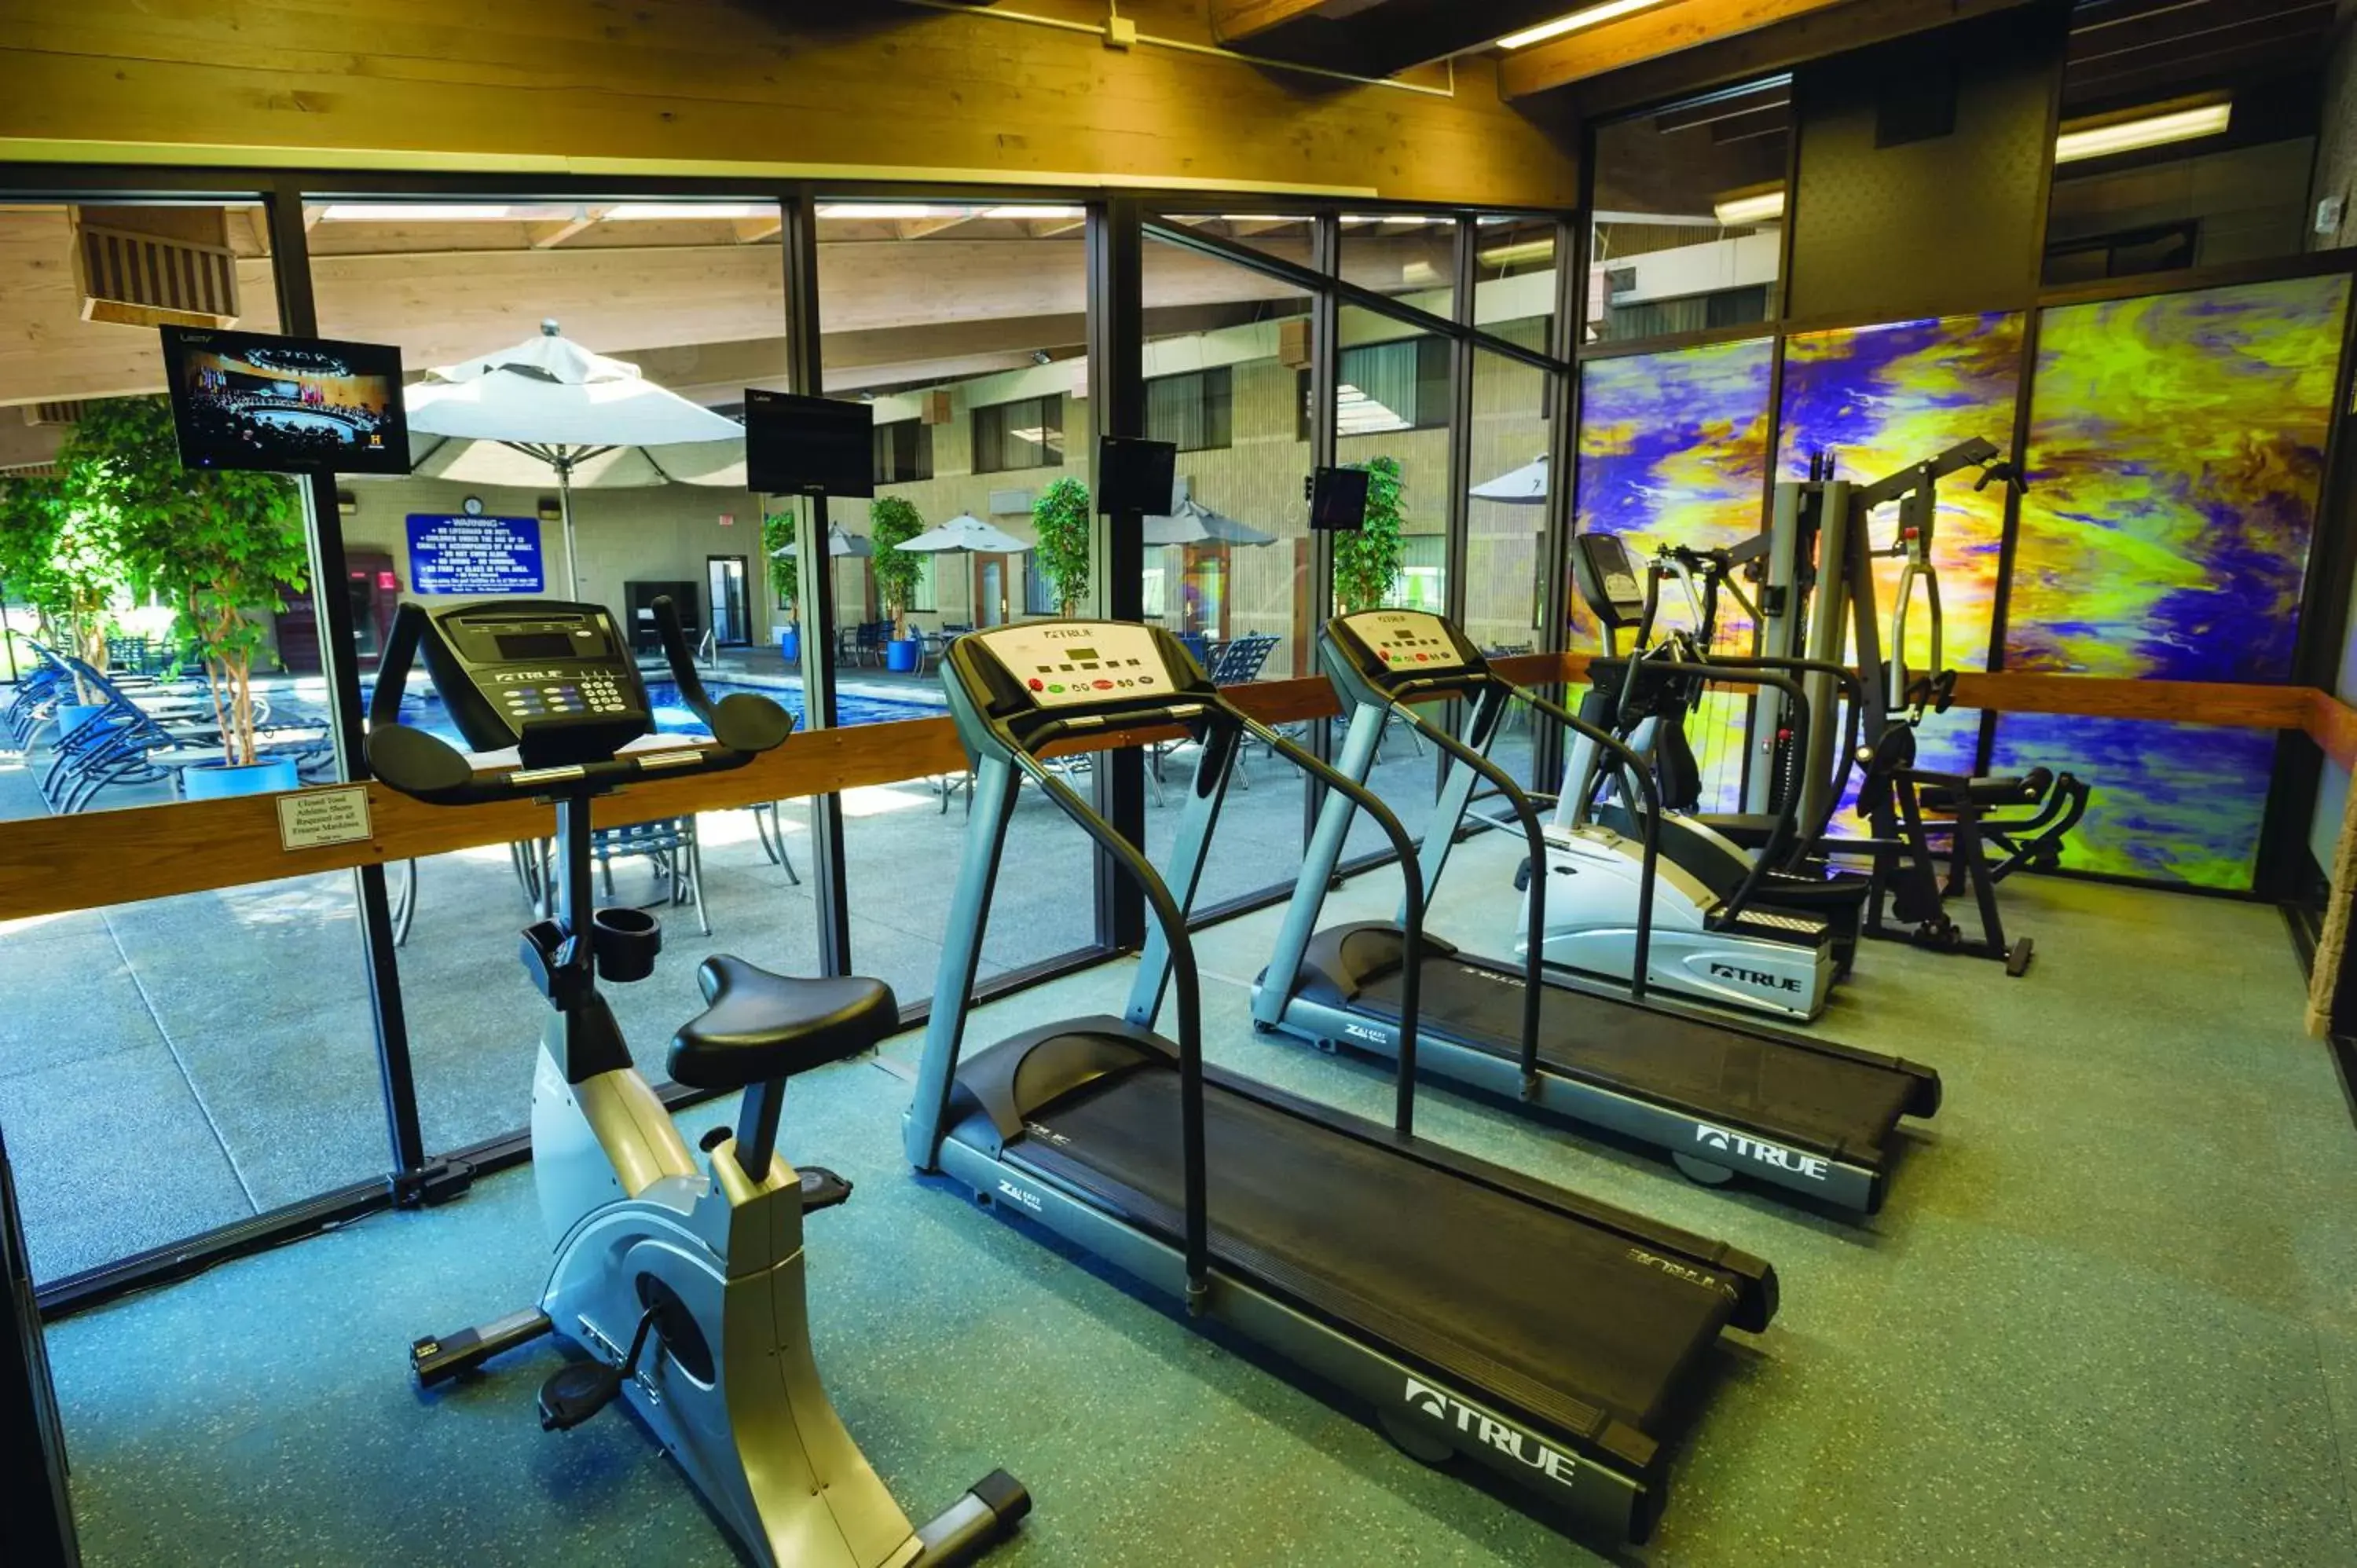 Fitness centre/facilities, Fitness Center/Facilities in Best Western Plus University Inn